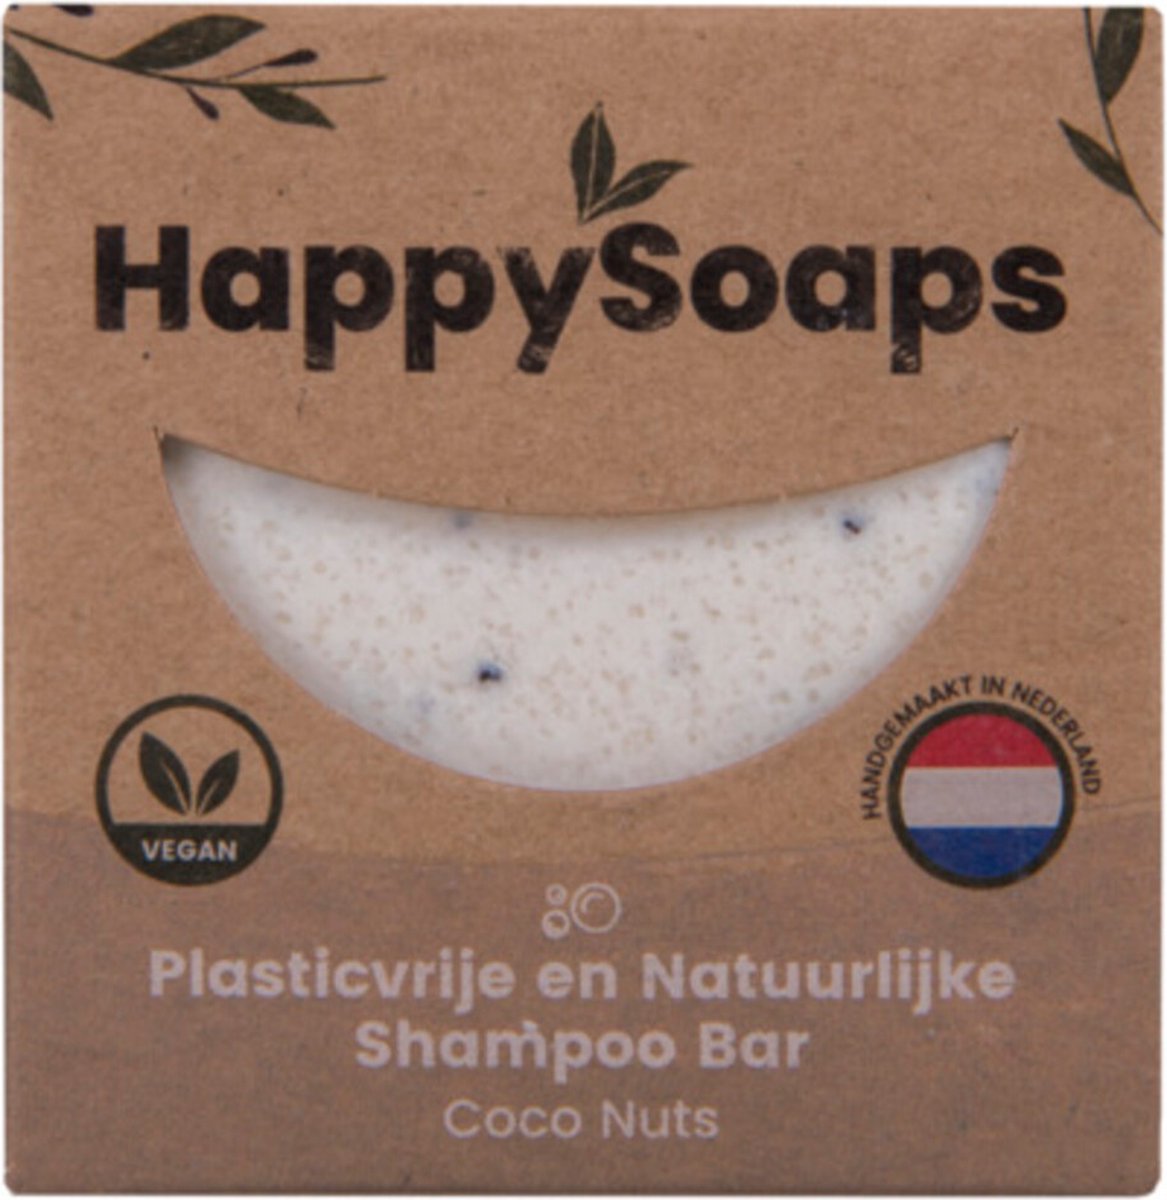 6x HappySoaps Shampoo Bar Coco Nuts 70 gr